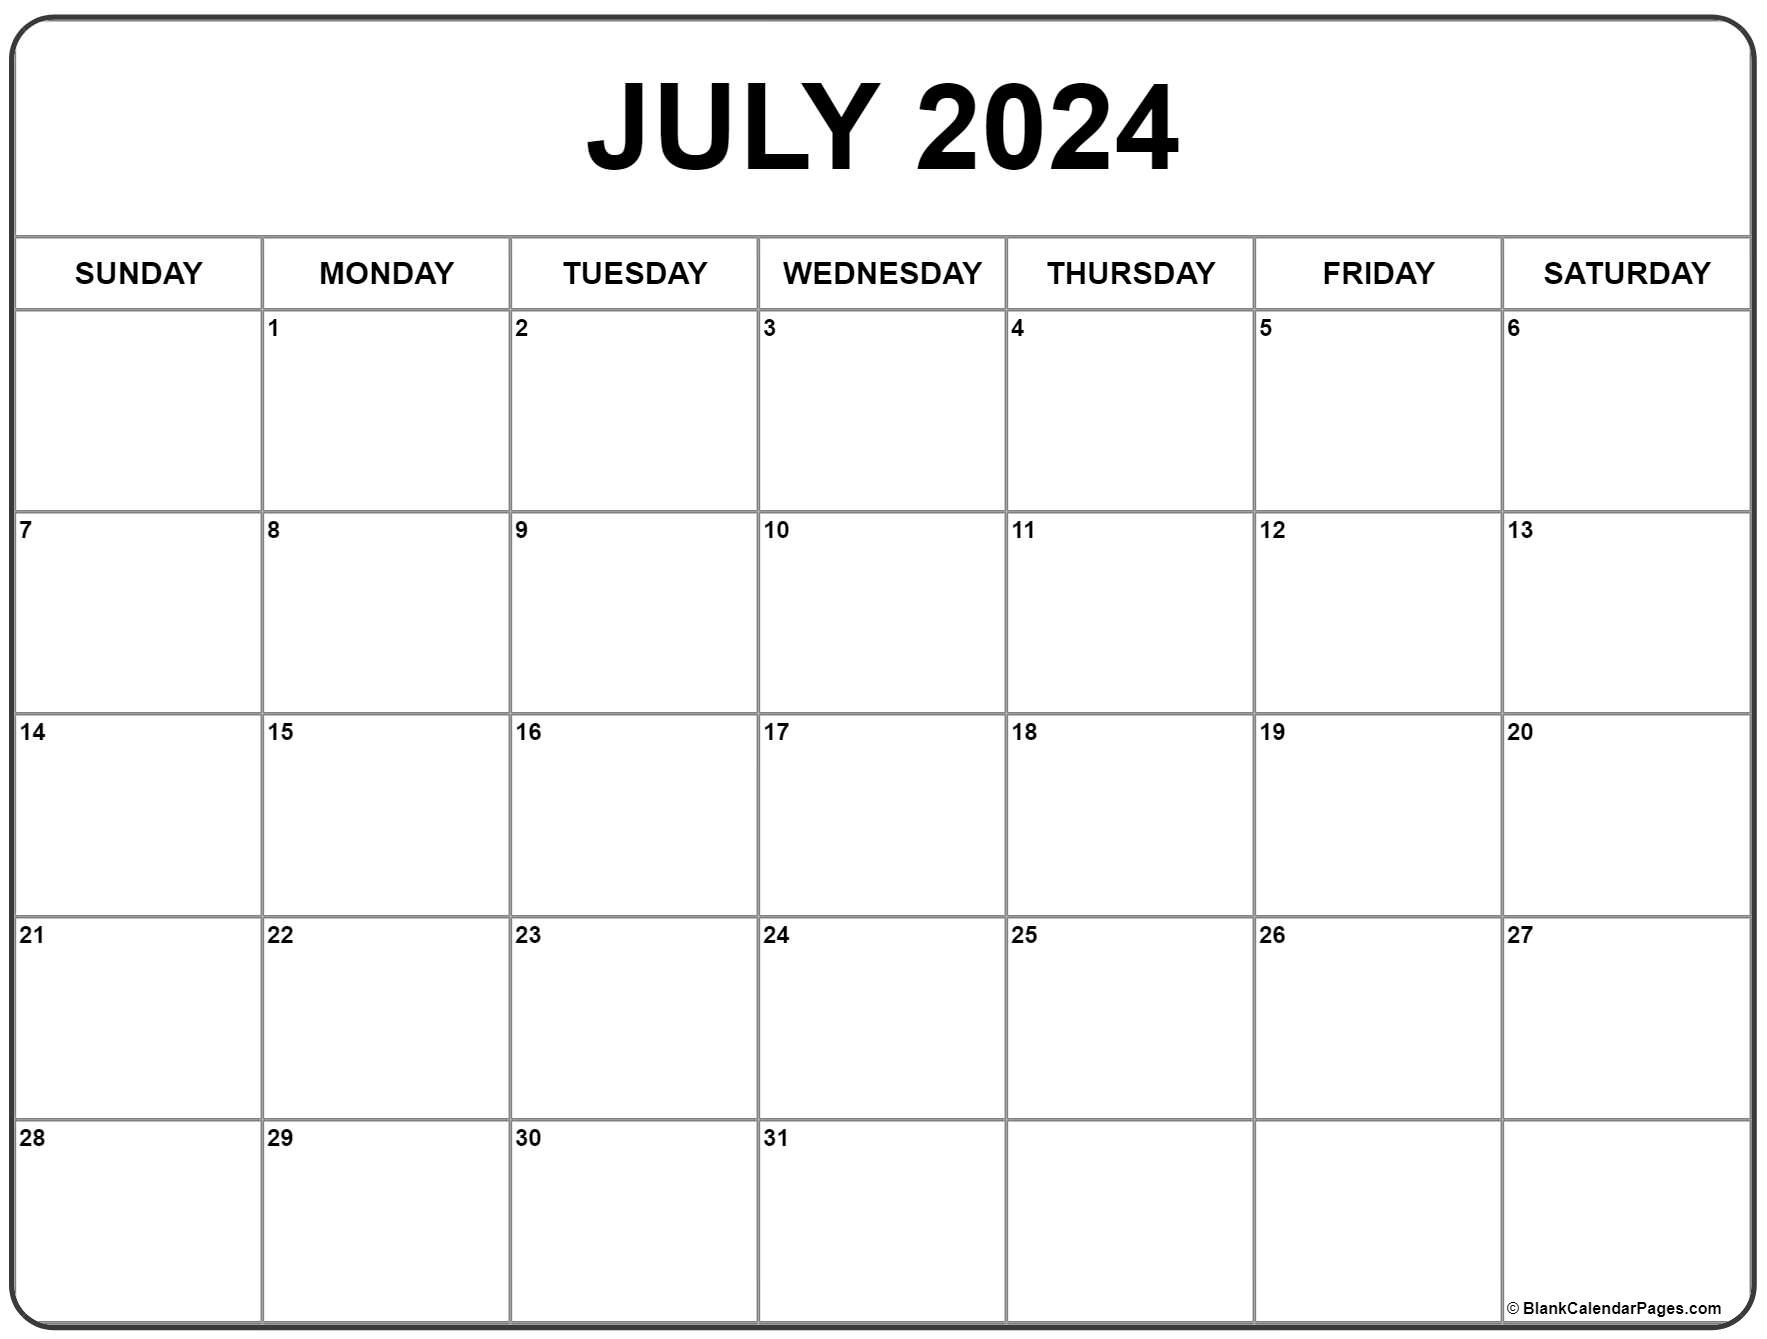 July 2024 Calendar | Free Printable Calendar for Calendar July 2024 Free Printable